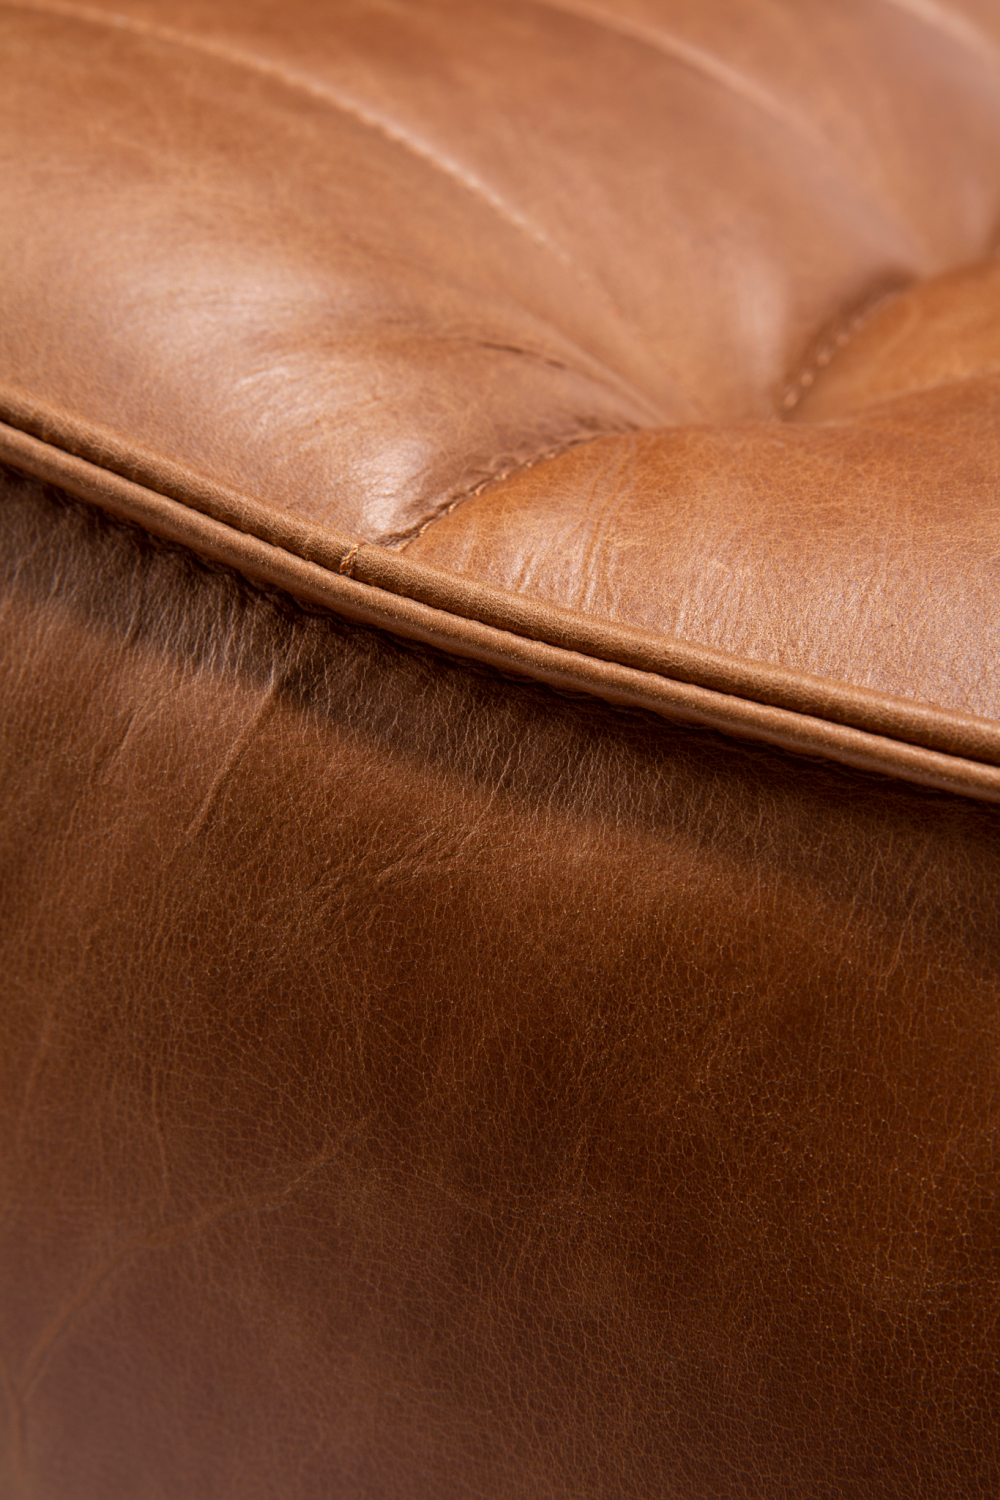 Leather Modular Sofa | Ethnicraft N701 | Oroa.com